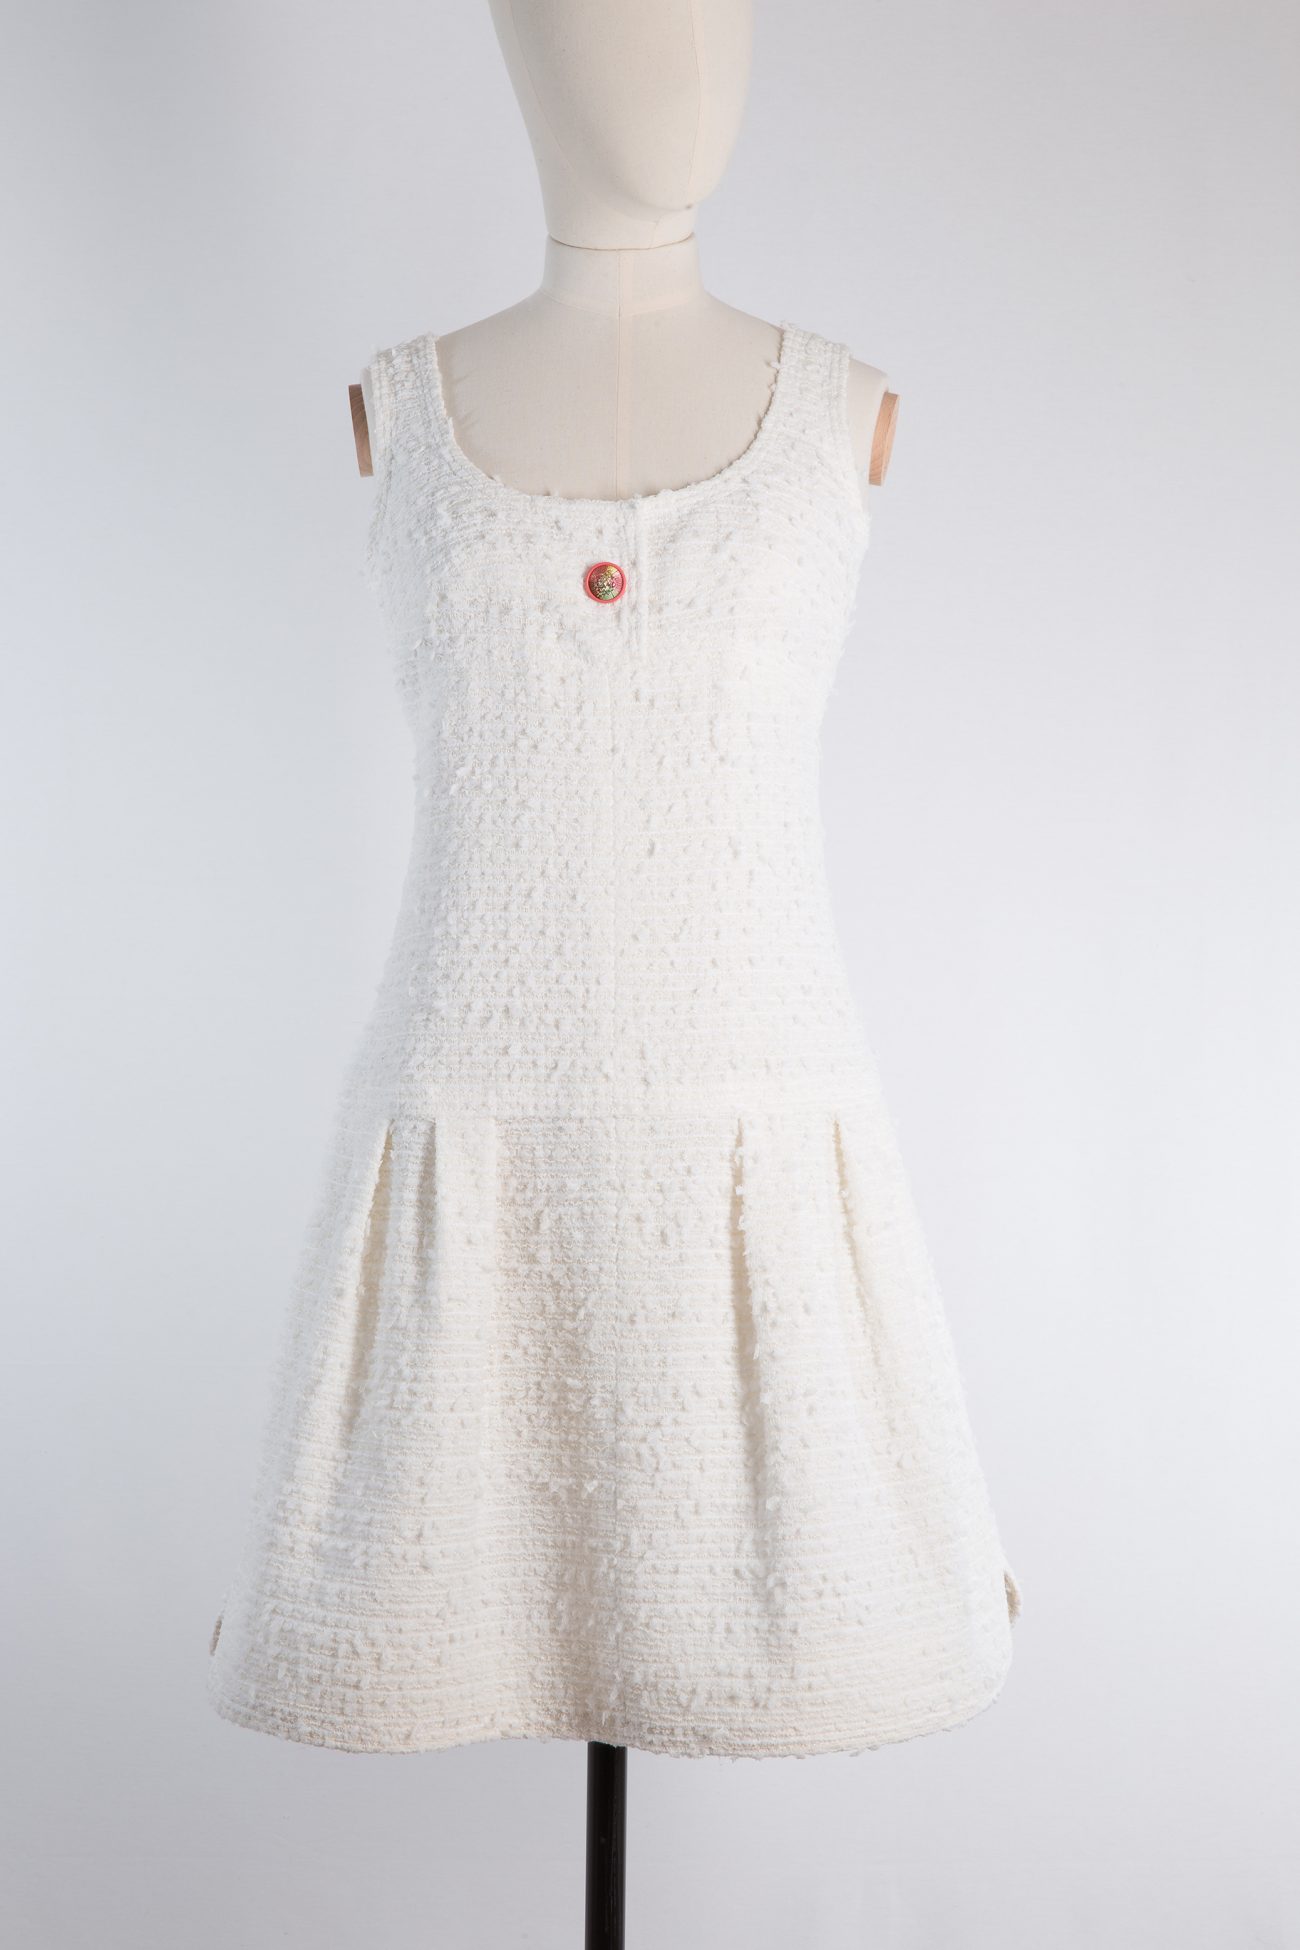 Chanel White Tweed Dress